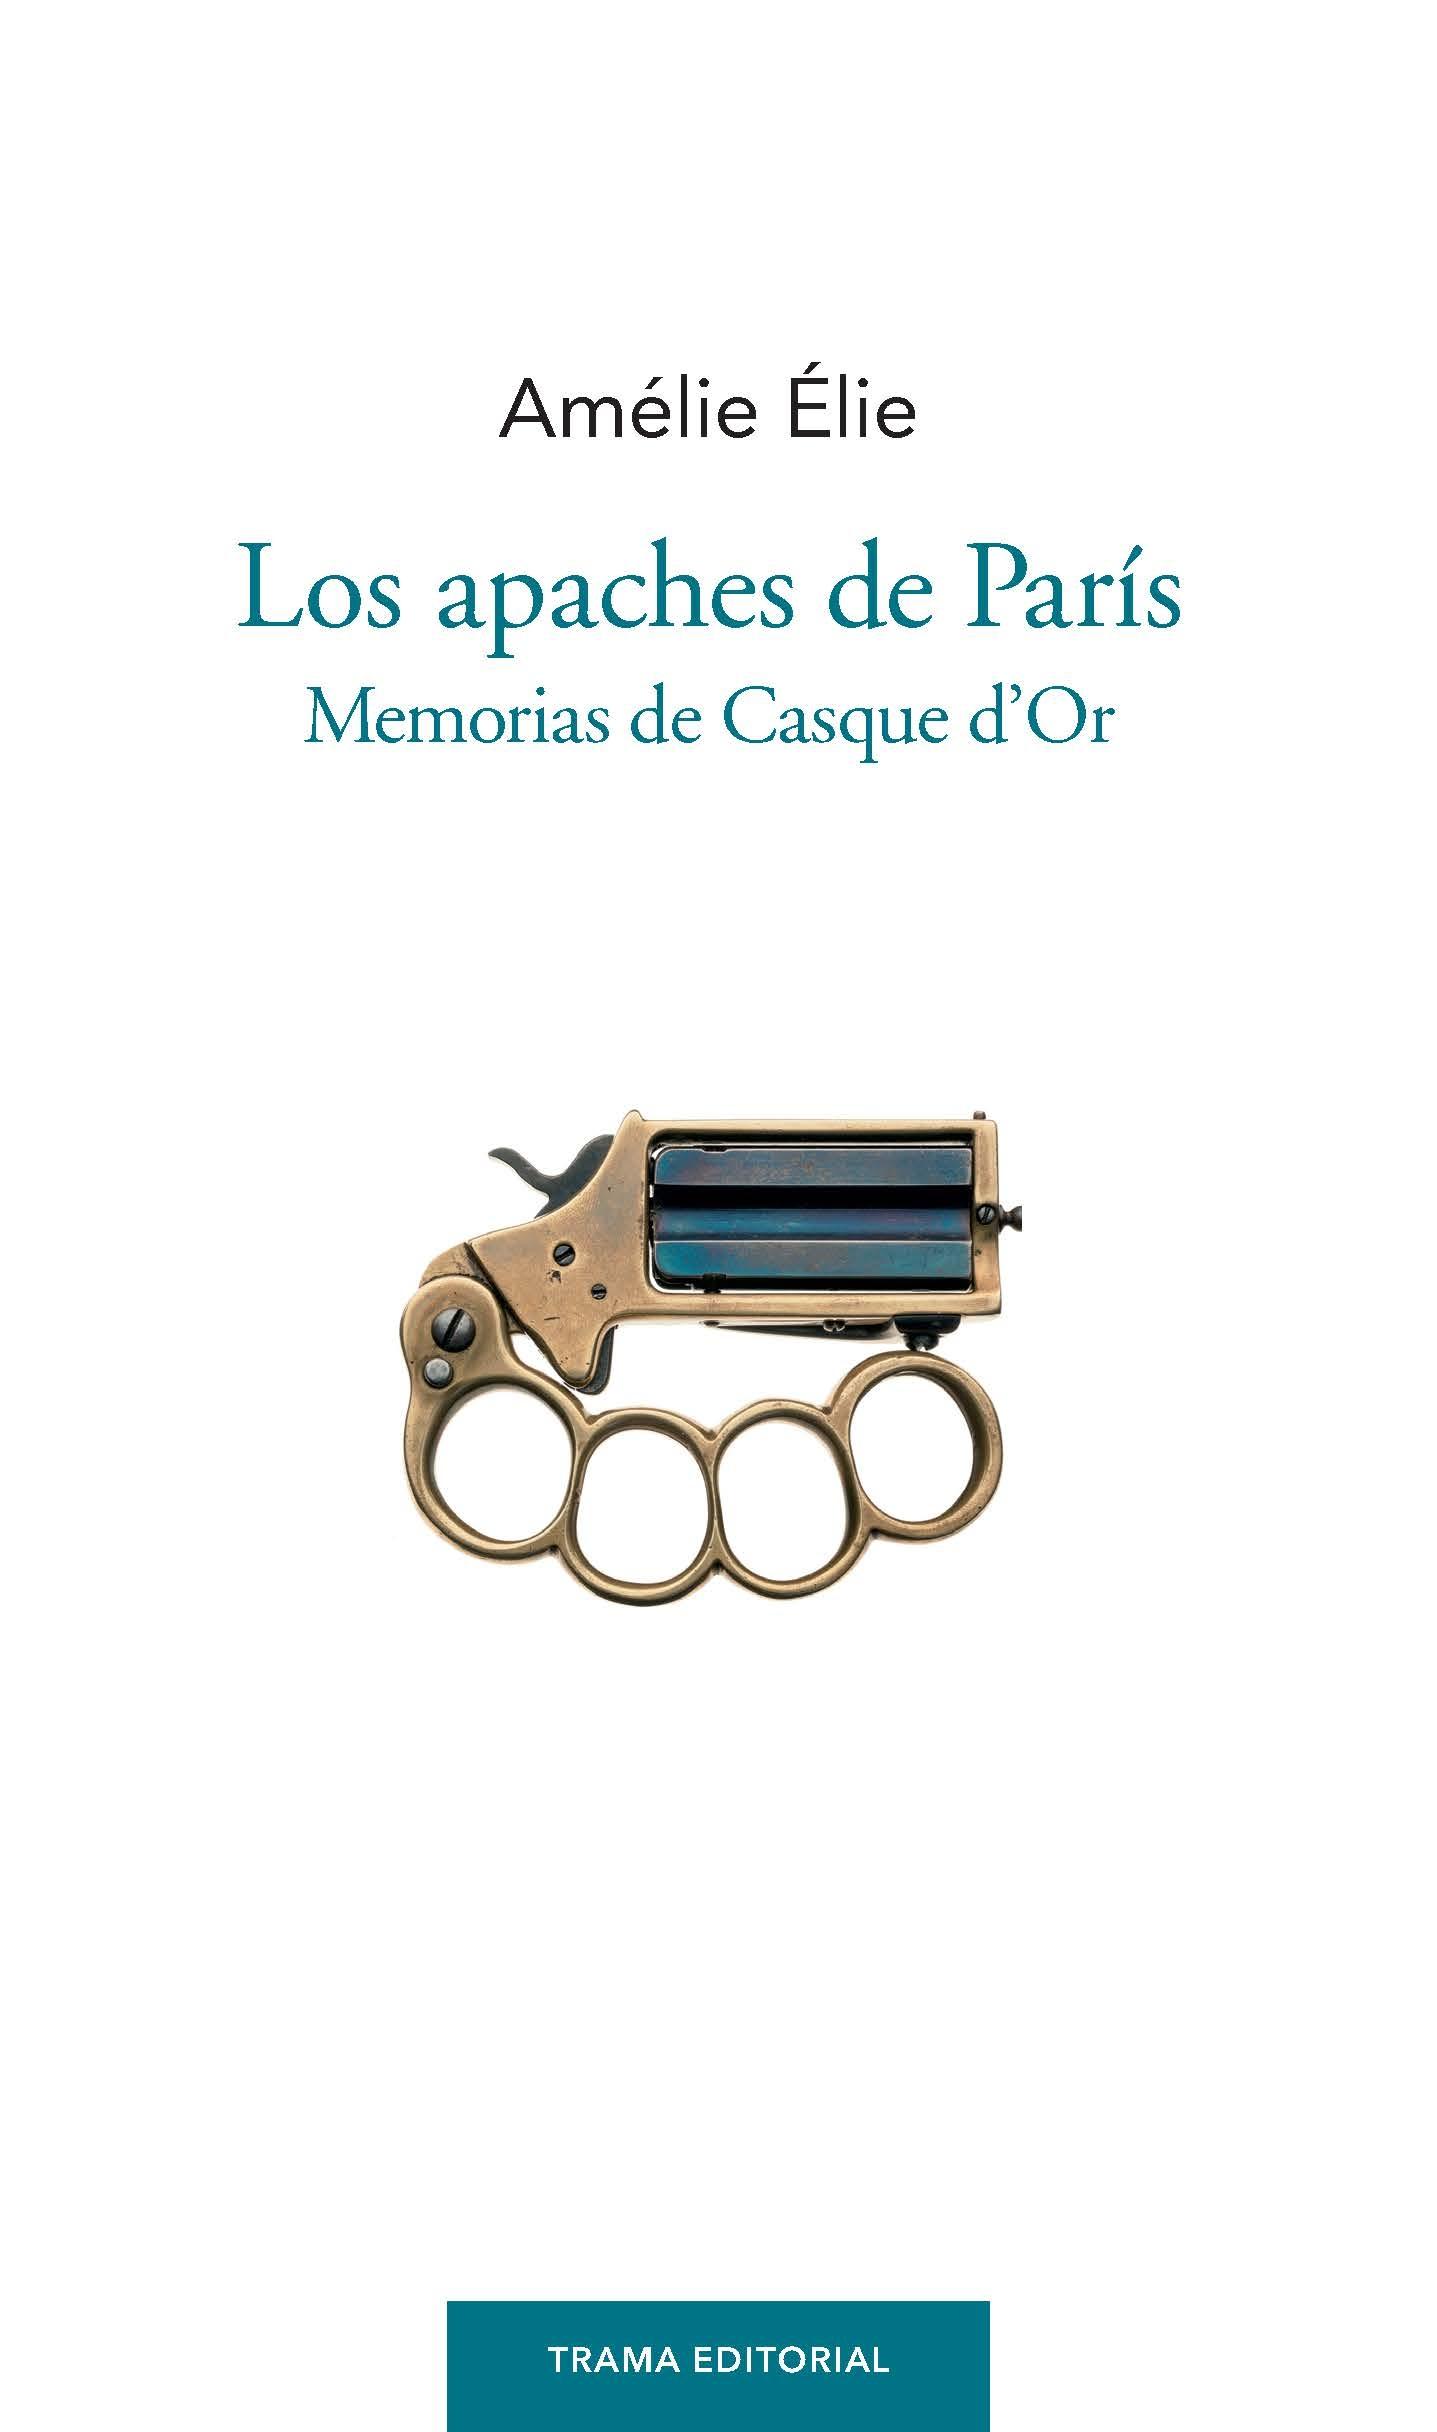 Los apaches de París: Memorias de Casque dOr